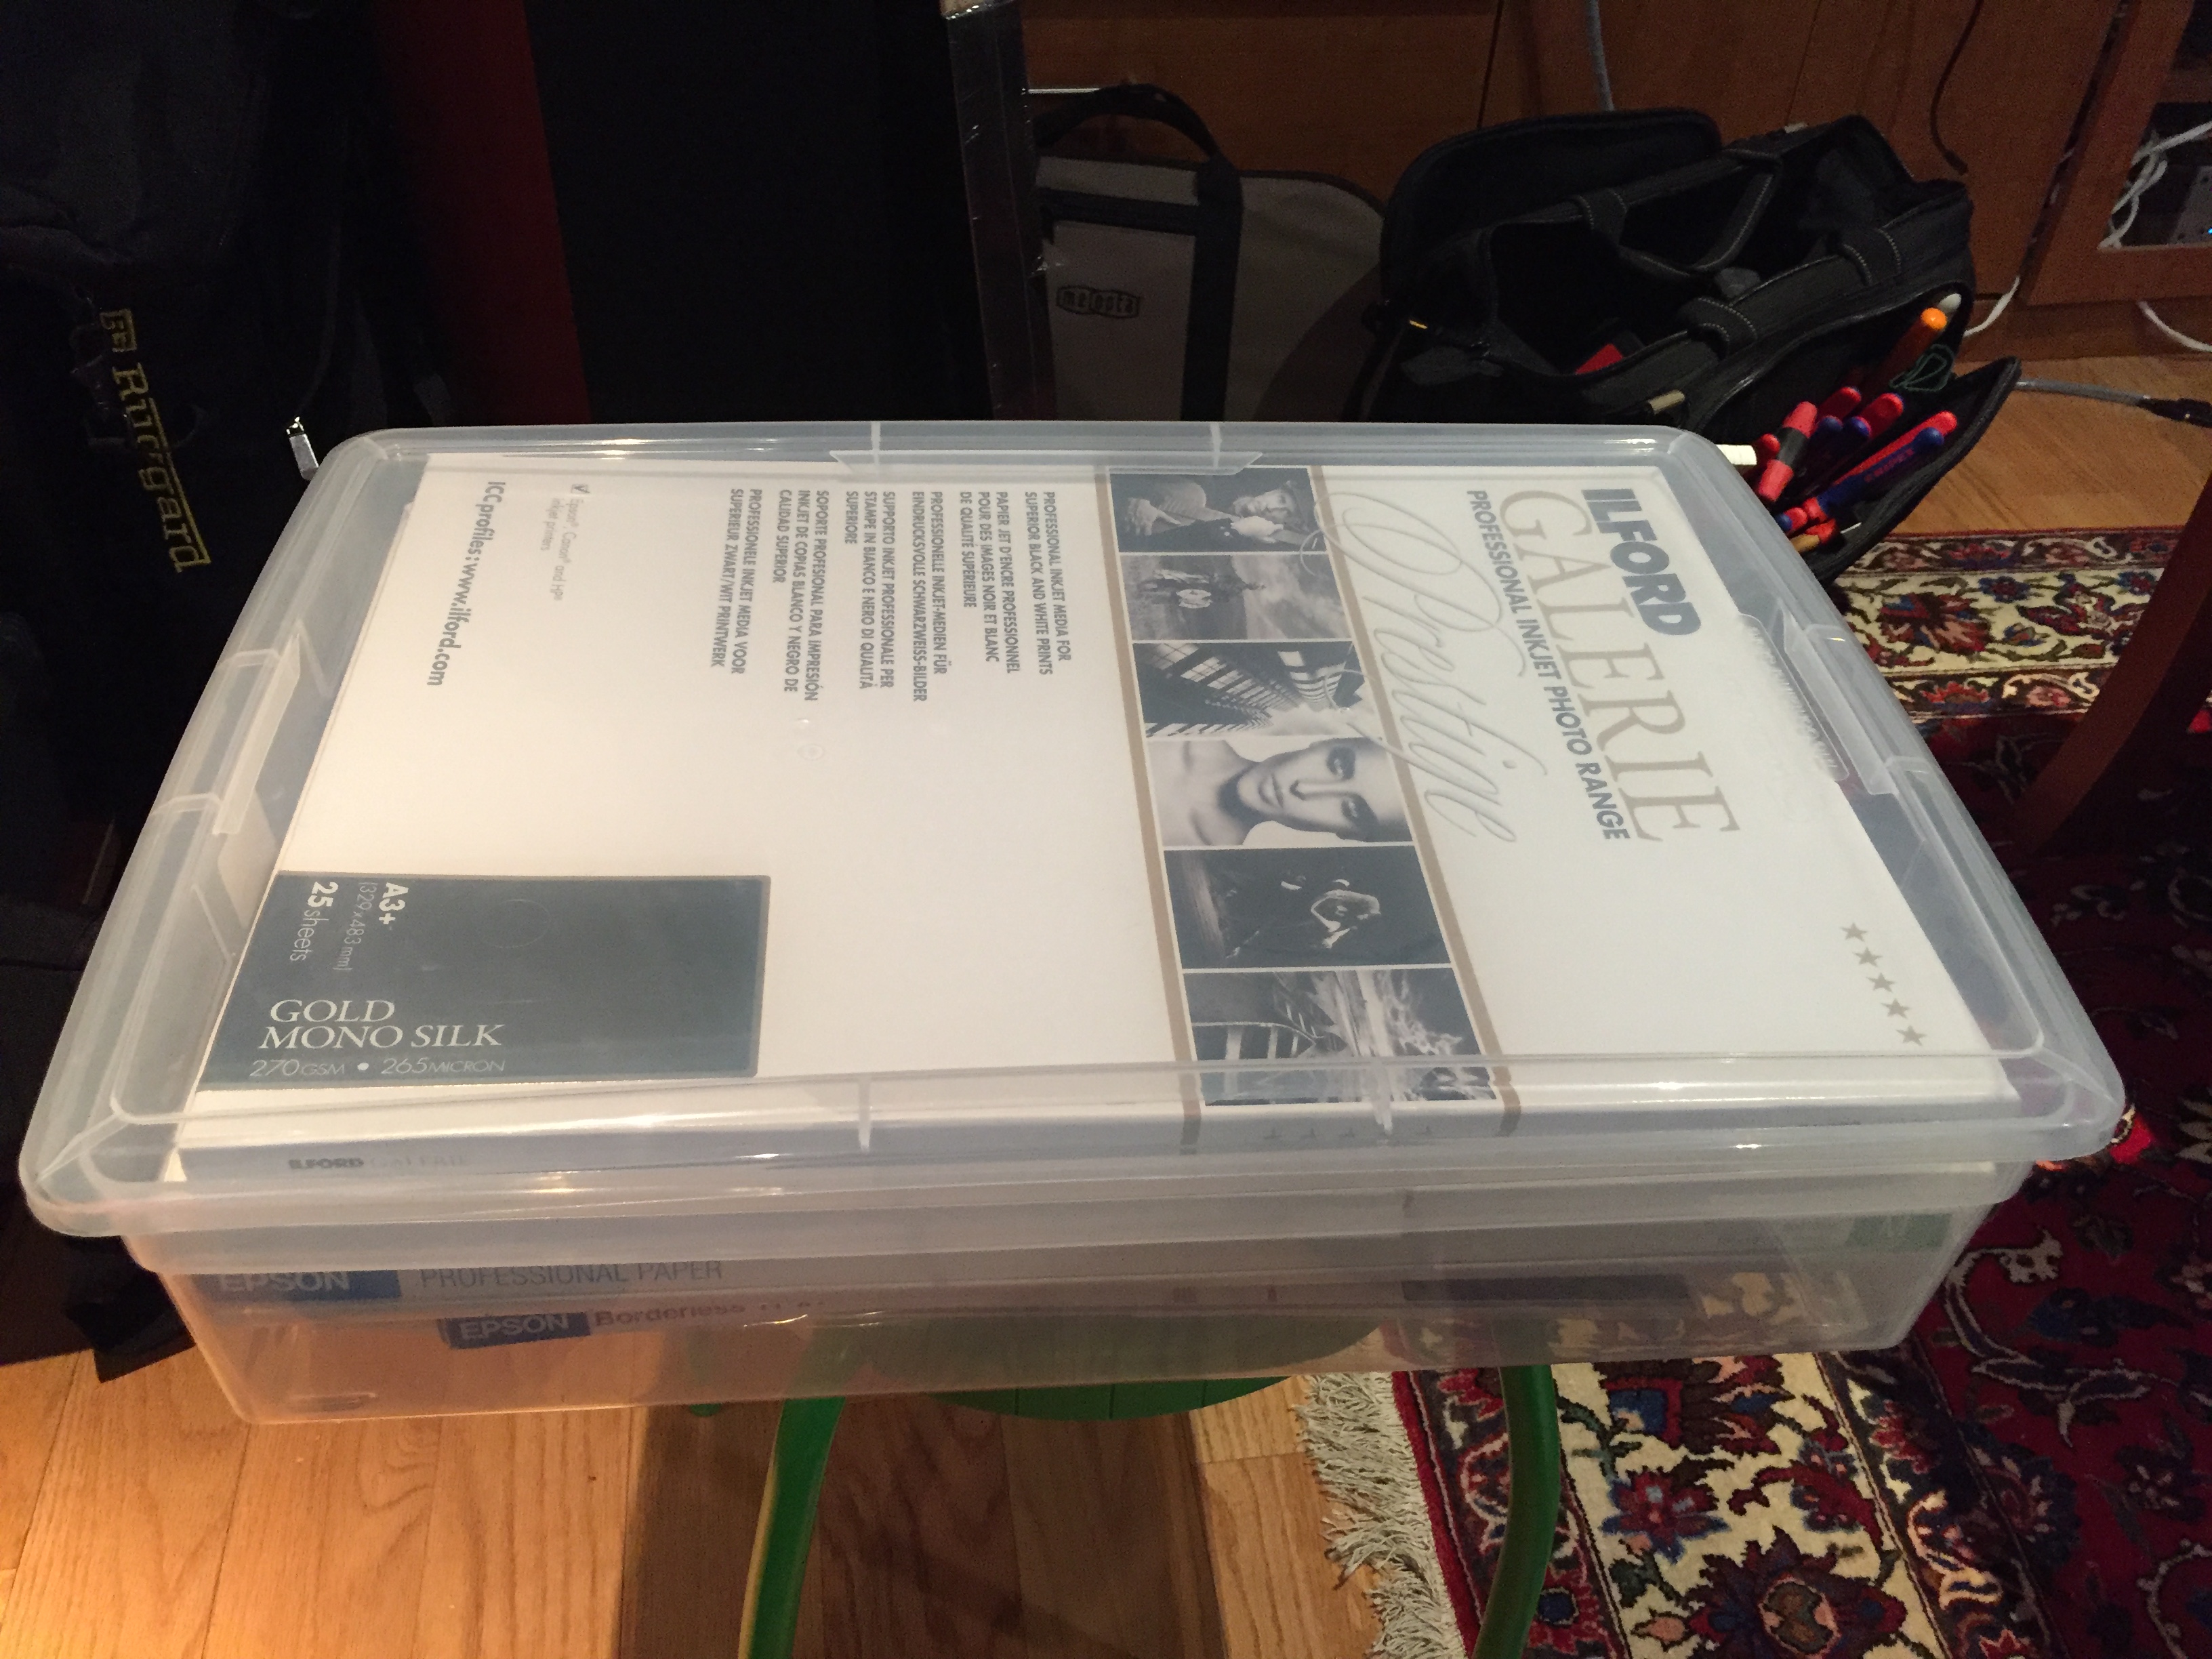 11 x 17 printer paper storage suggestions : r/organizing